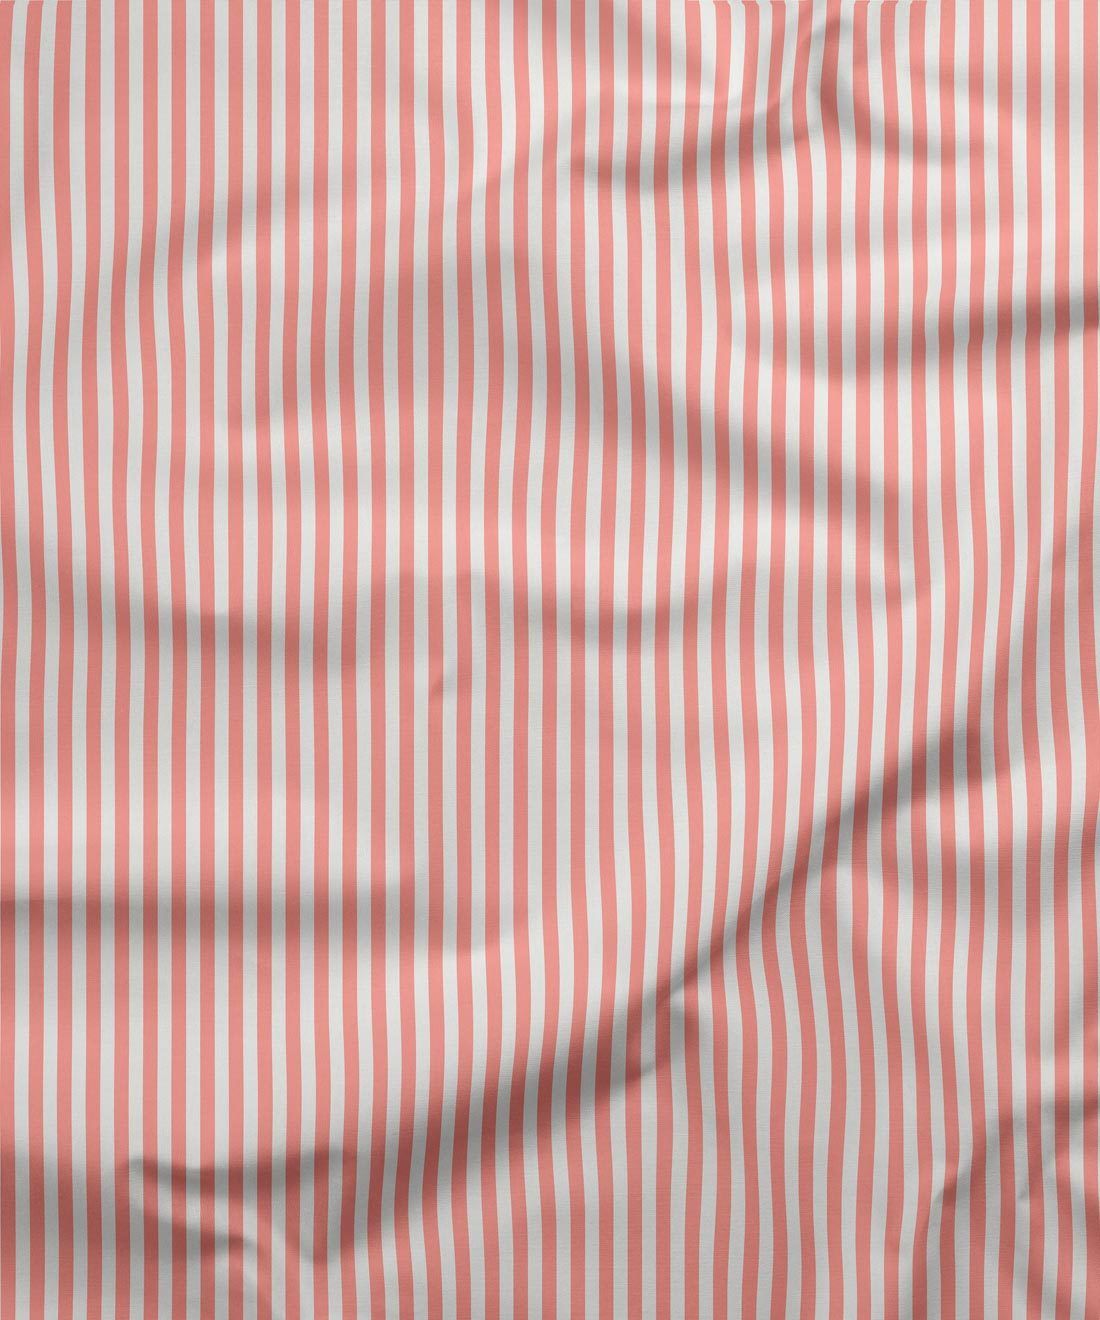 Candy Stripe Pink Fabric